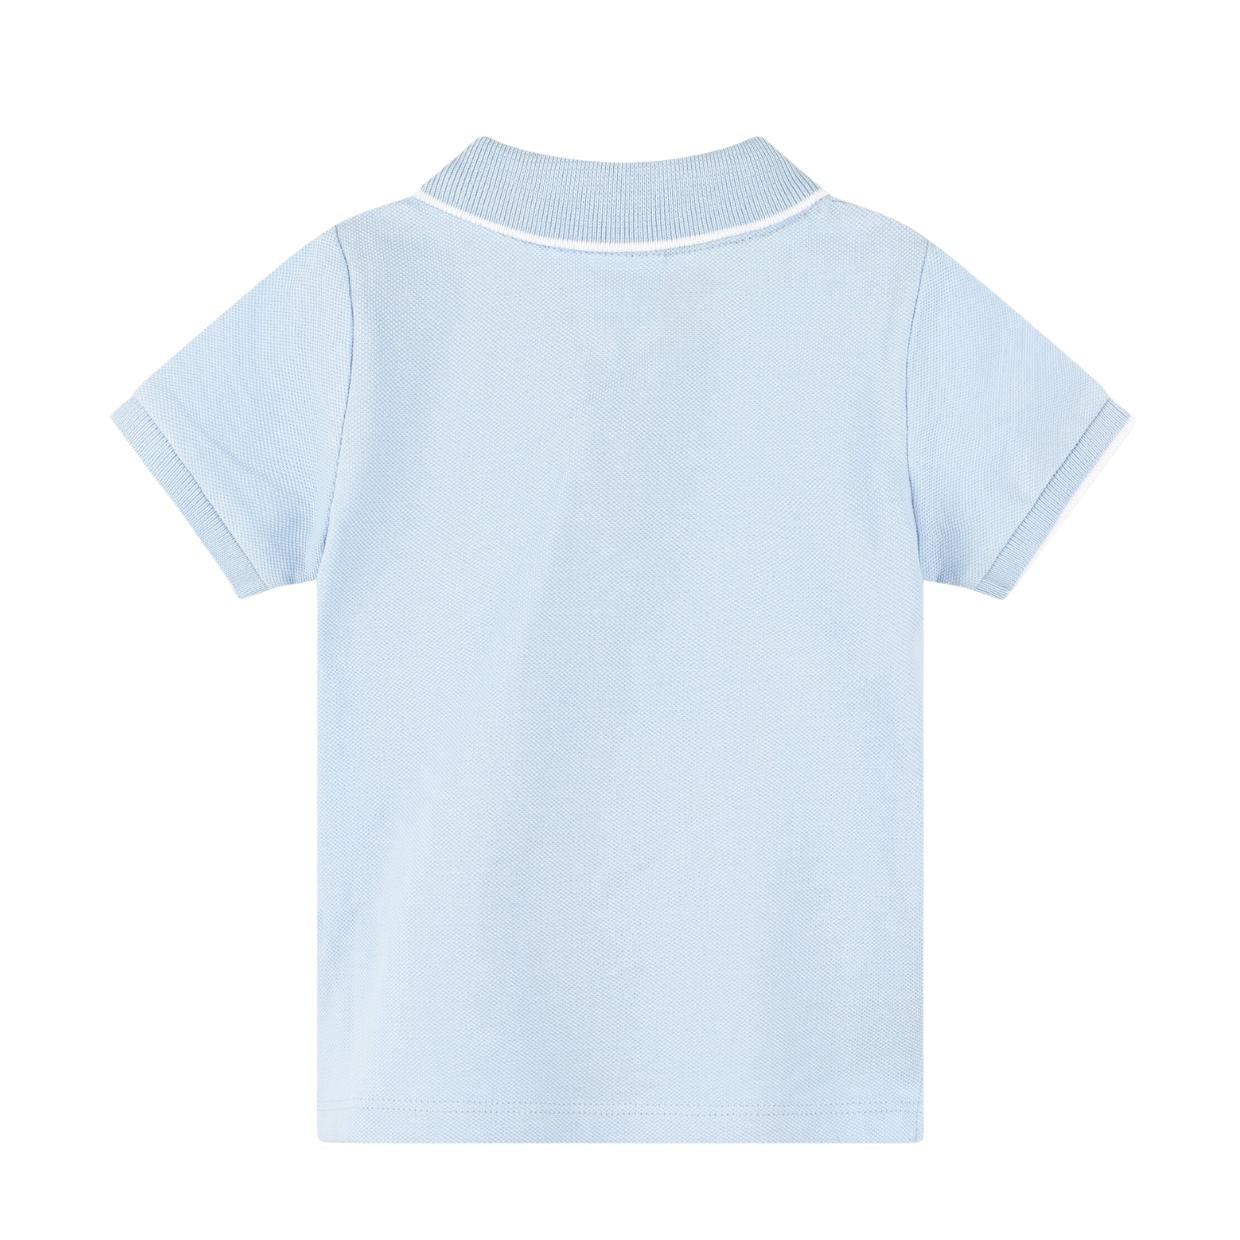 BOSS Baby Print Logo Short Sleeve Sky Blue Polo Shirt